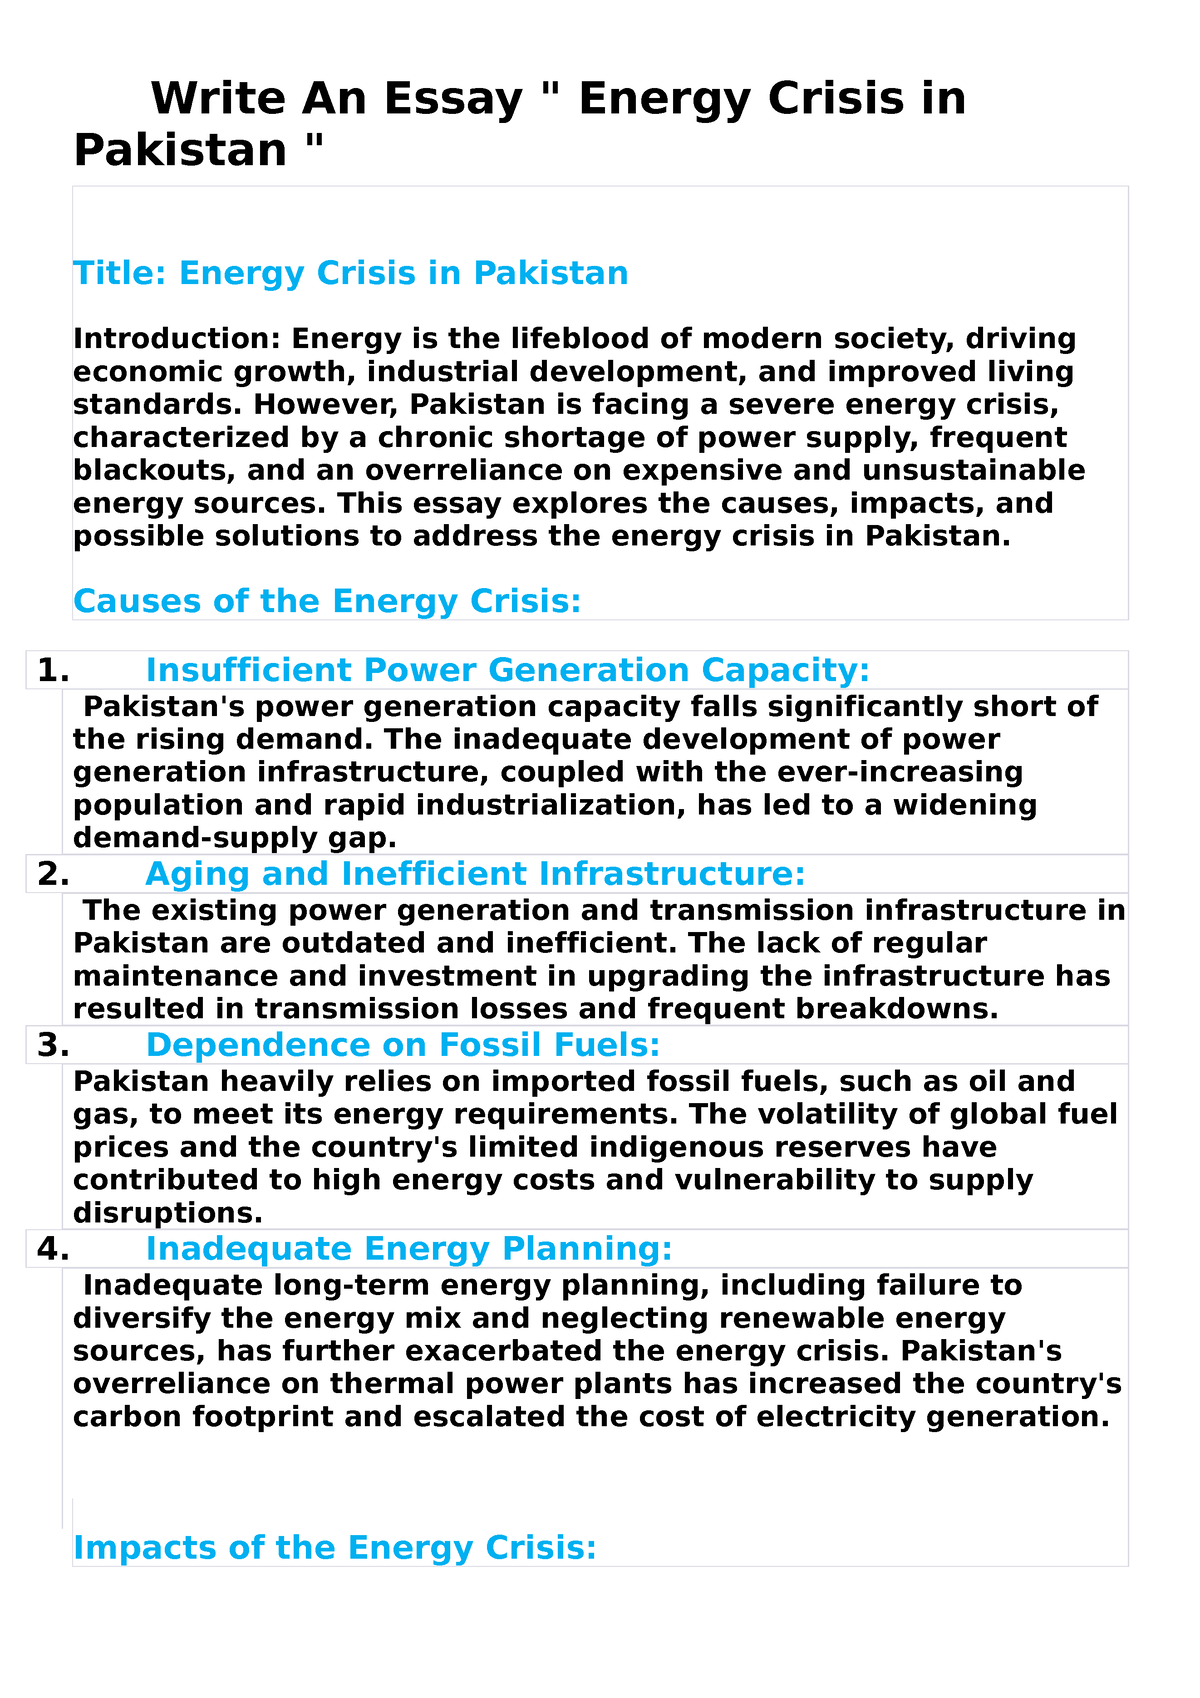 energy crisis in pakistan essay quotations